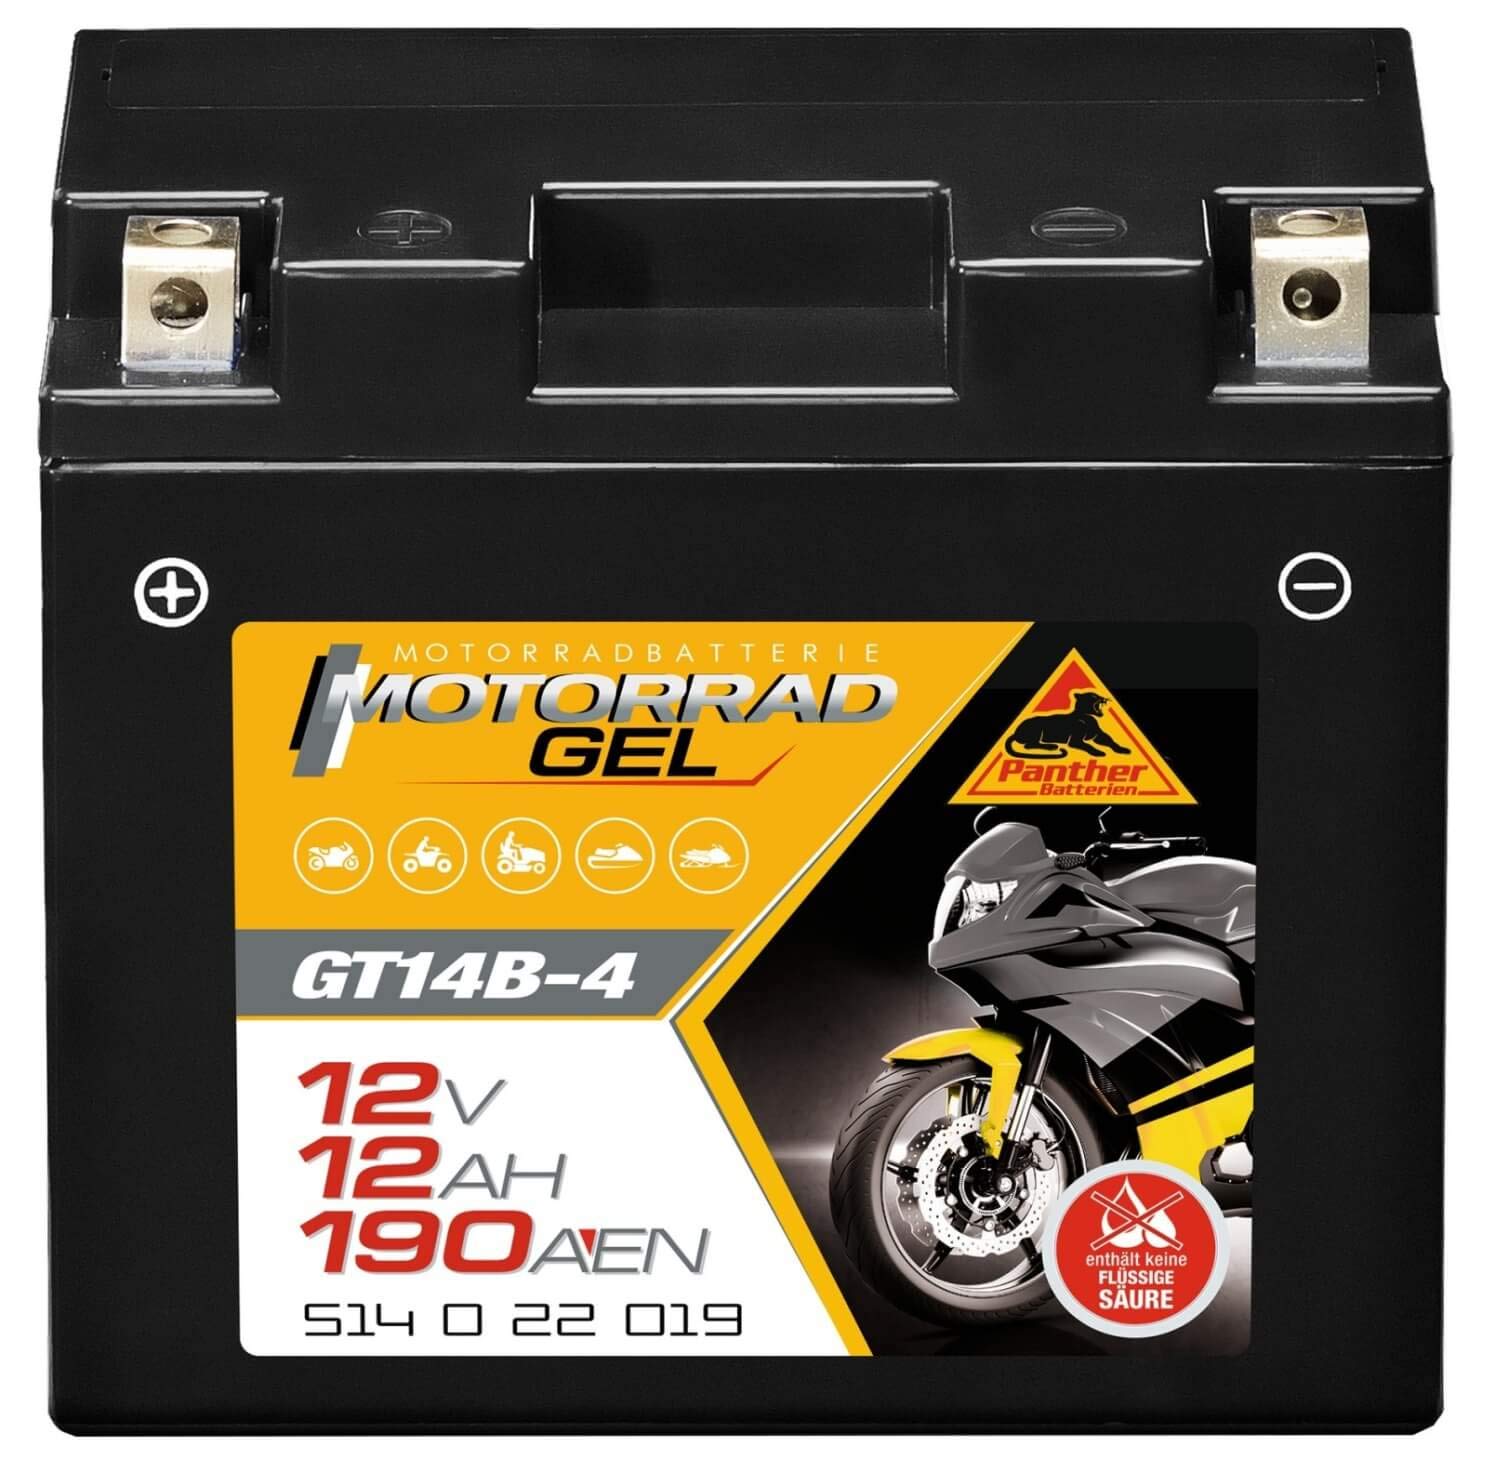 Panther Motorradbatterie Gel 12V 12Ah 51422 GT14B-4 von Panther